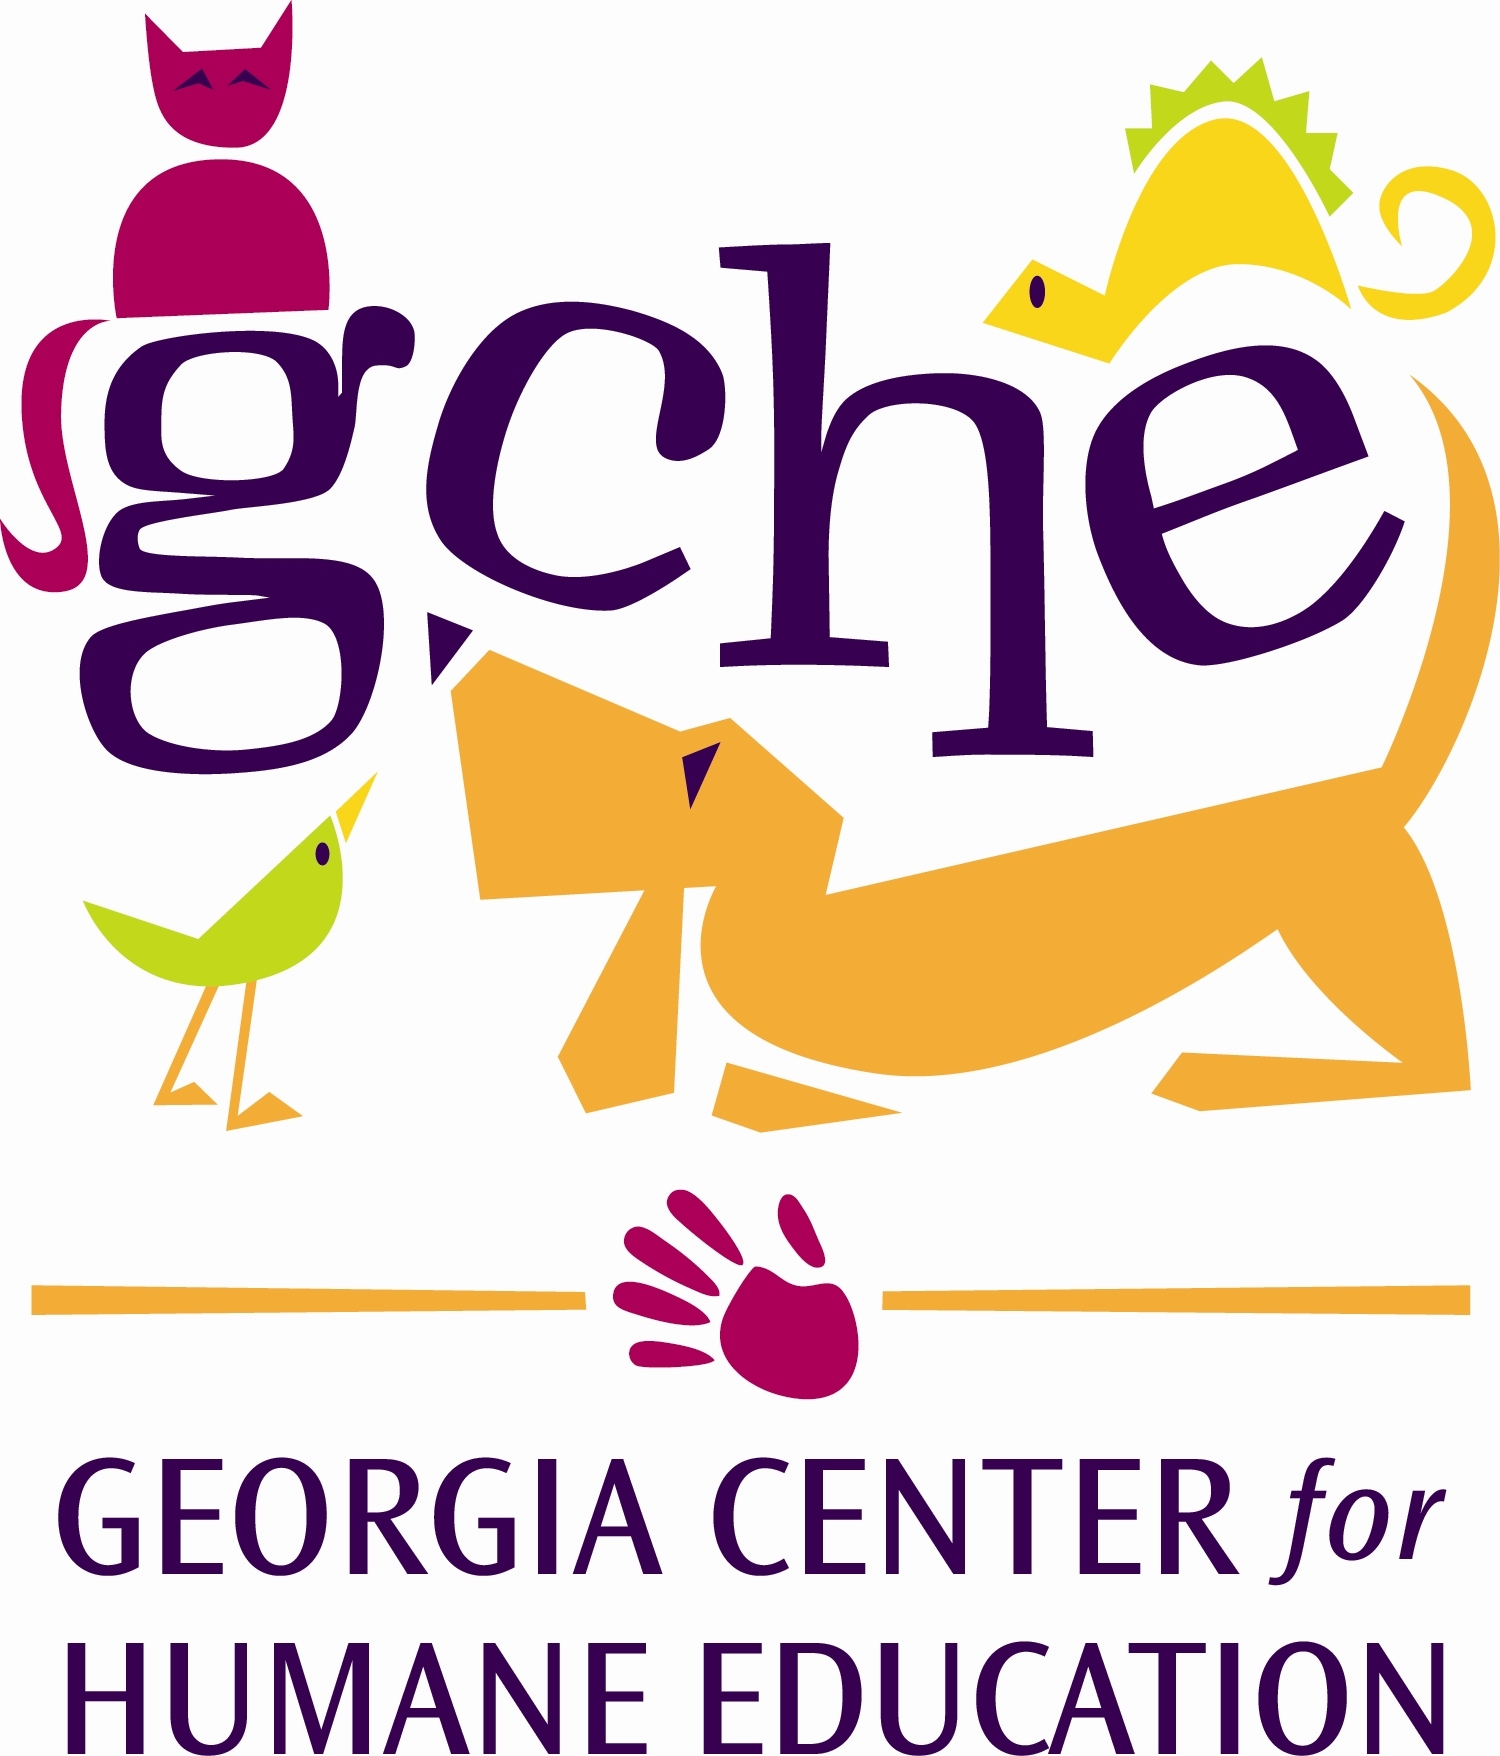 Georgia center for humane education